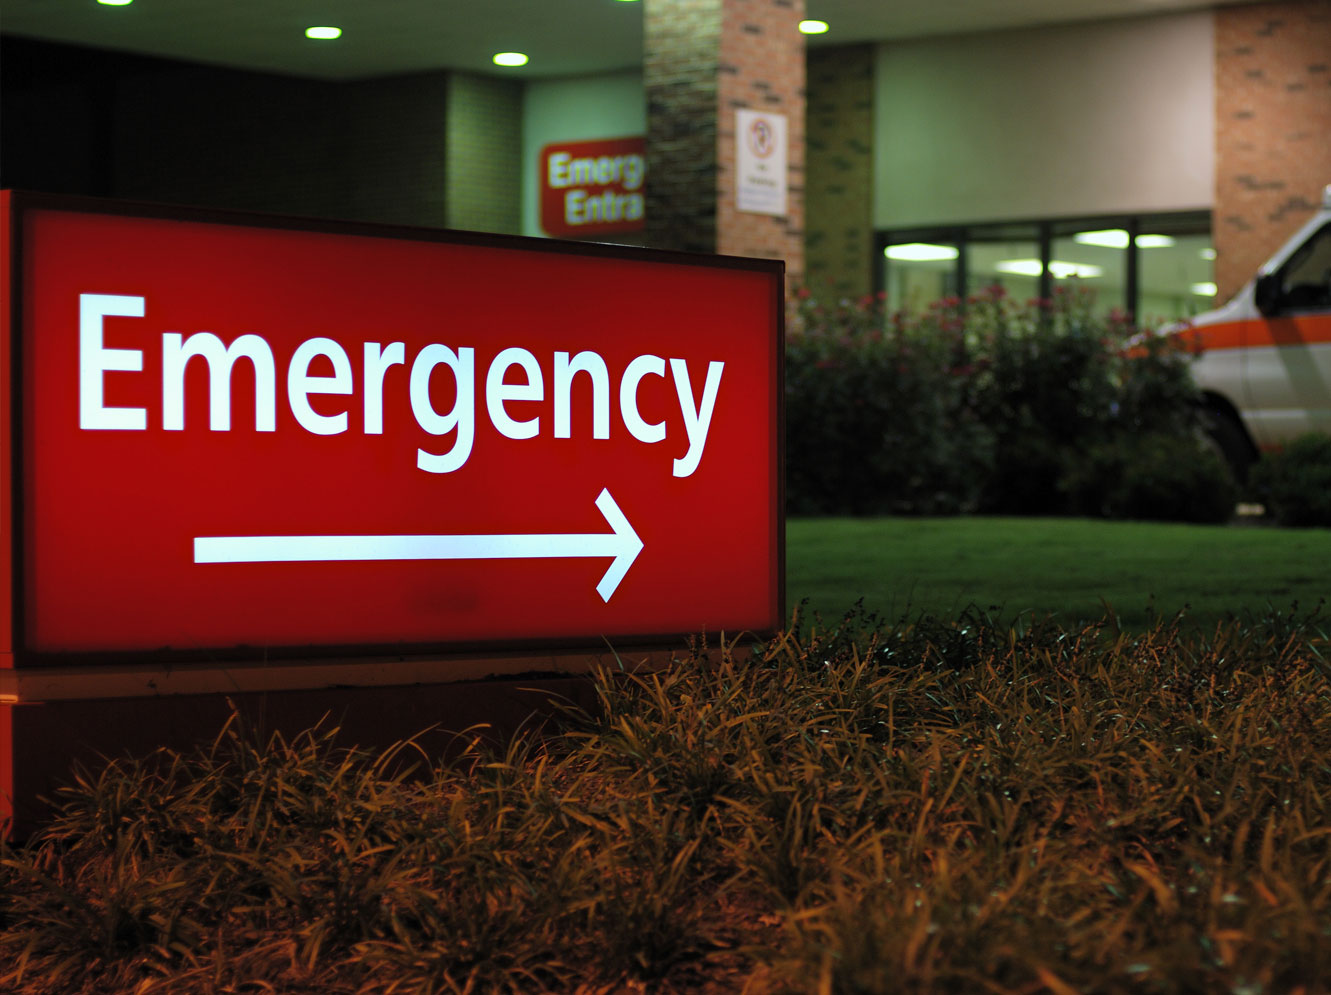 Emergency Room in Henderson & Las Vegas, NV, St. Rose Dominican Hospital